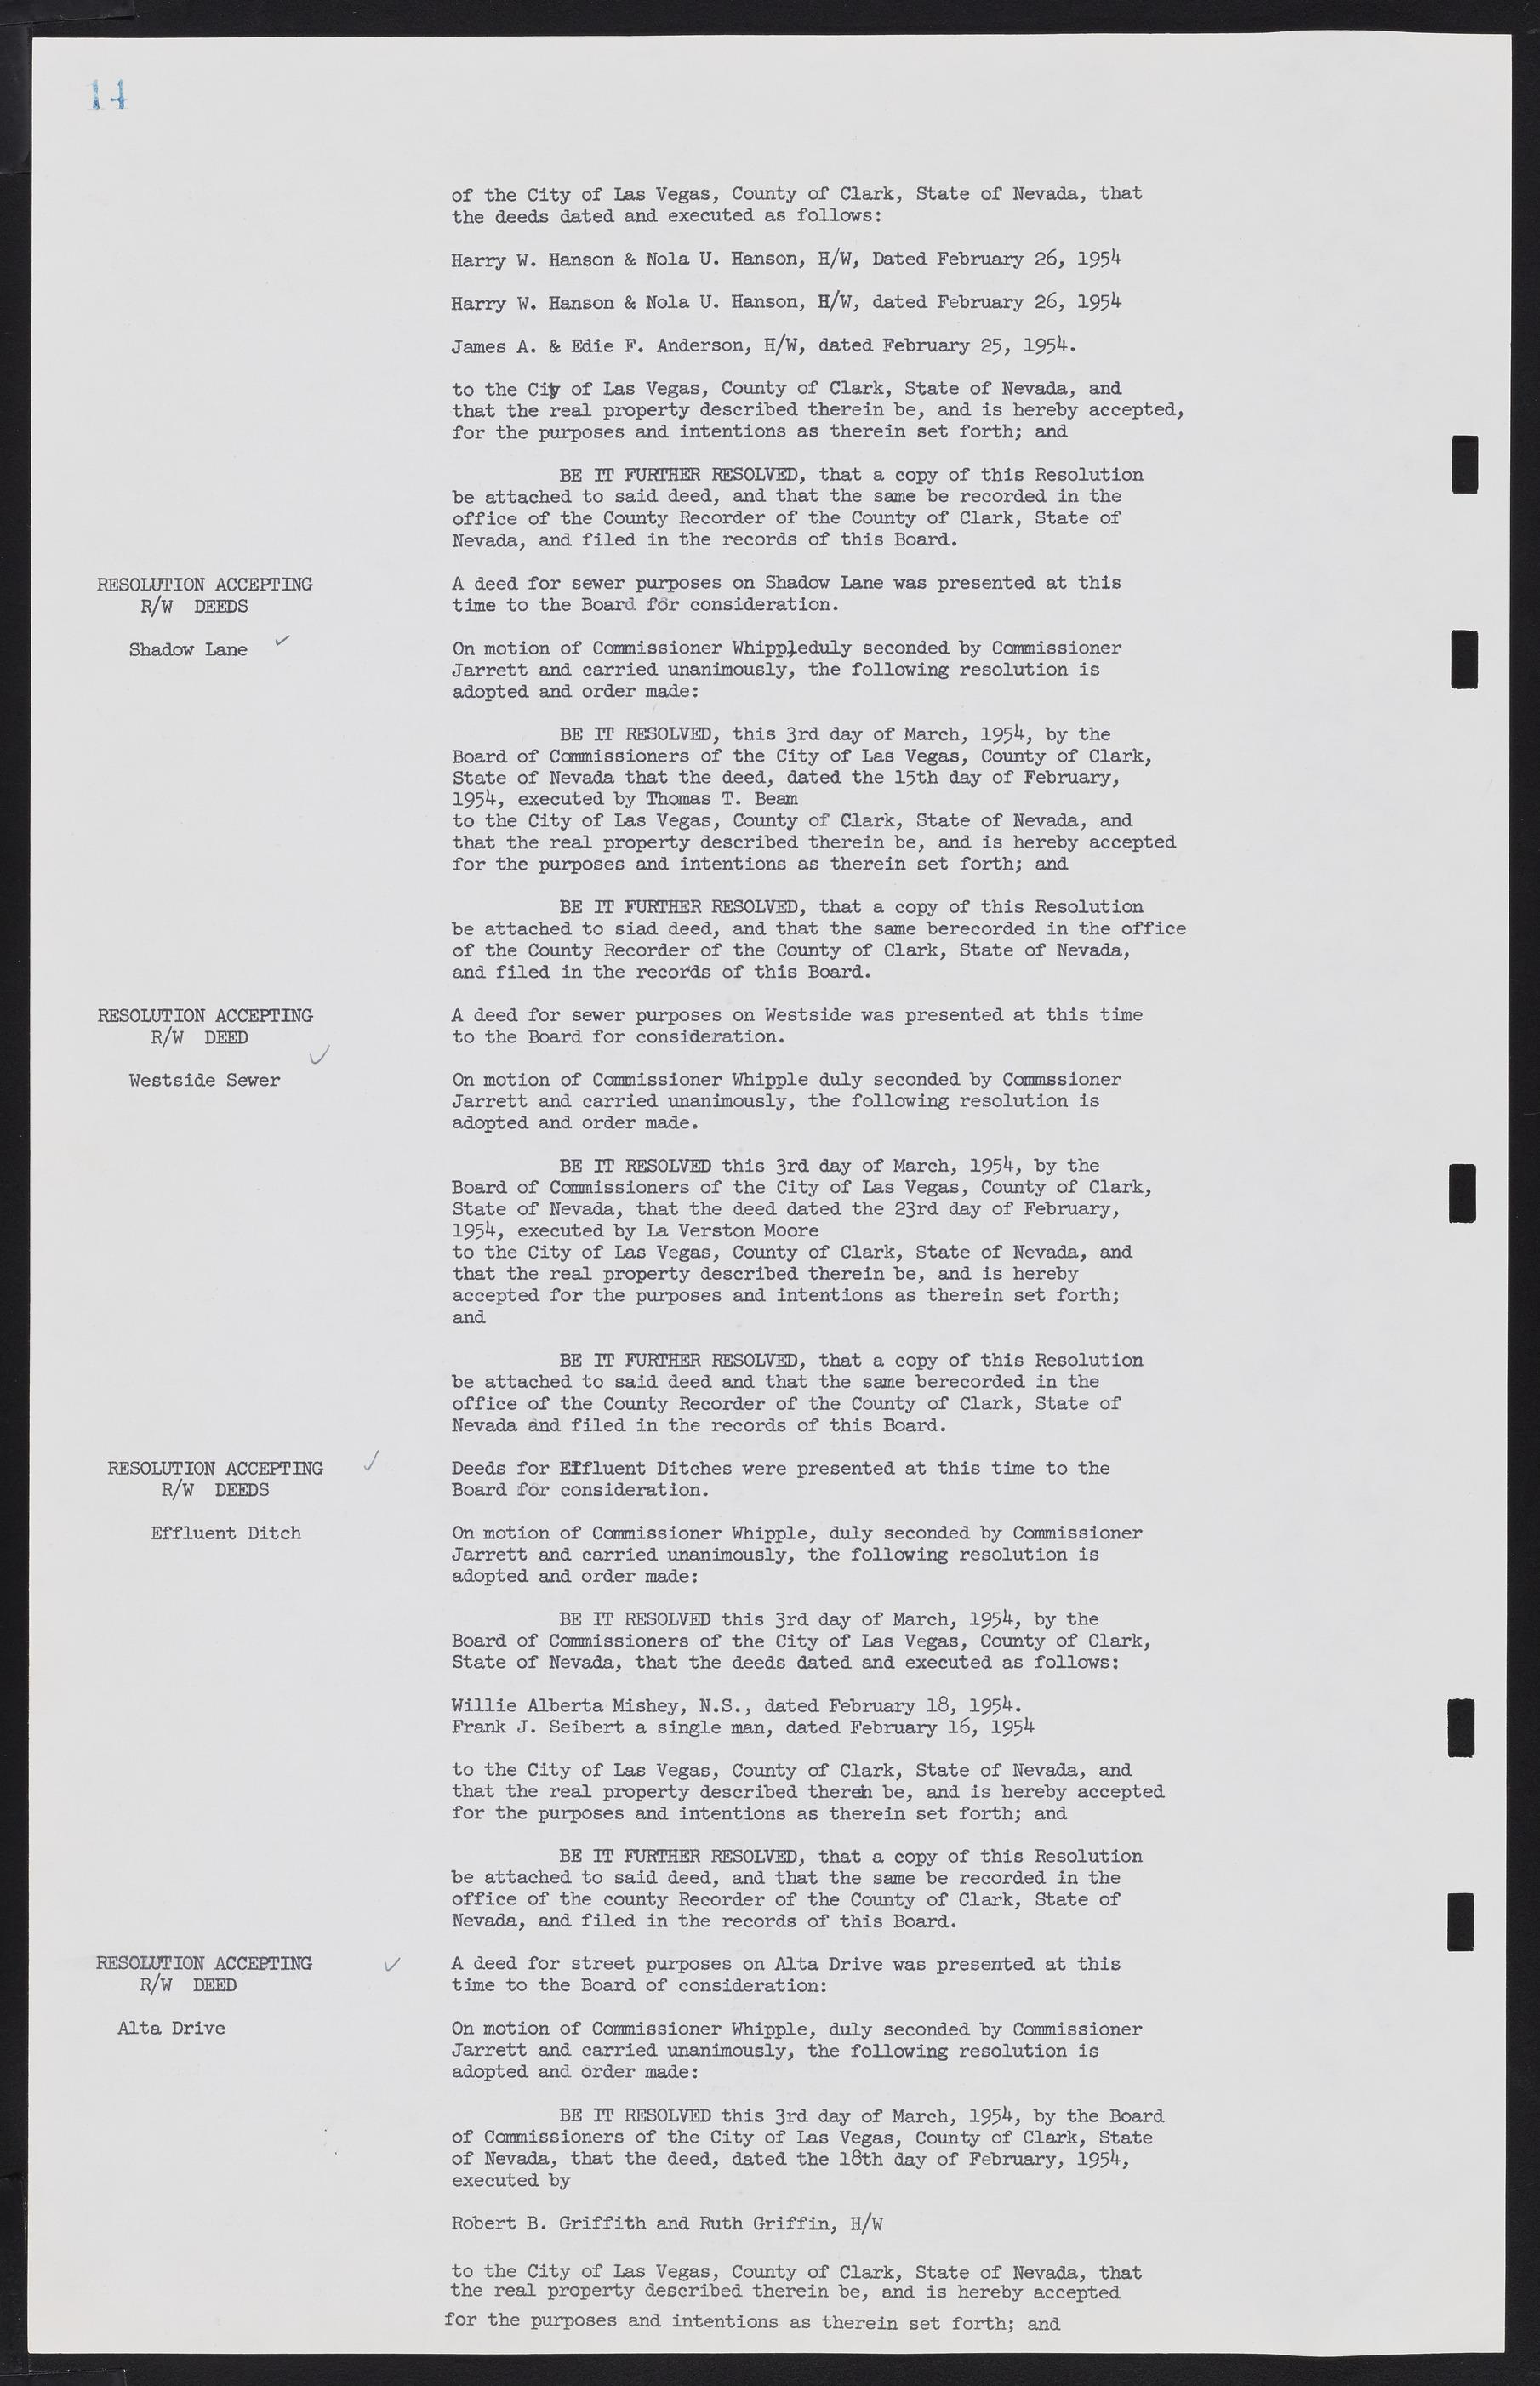 Las Vegas City Commission Minutes, February 17, 1954 to September 21, 1955, lvc000009-18